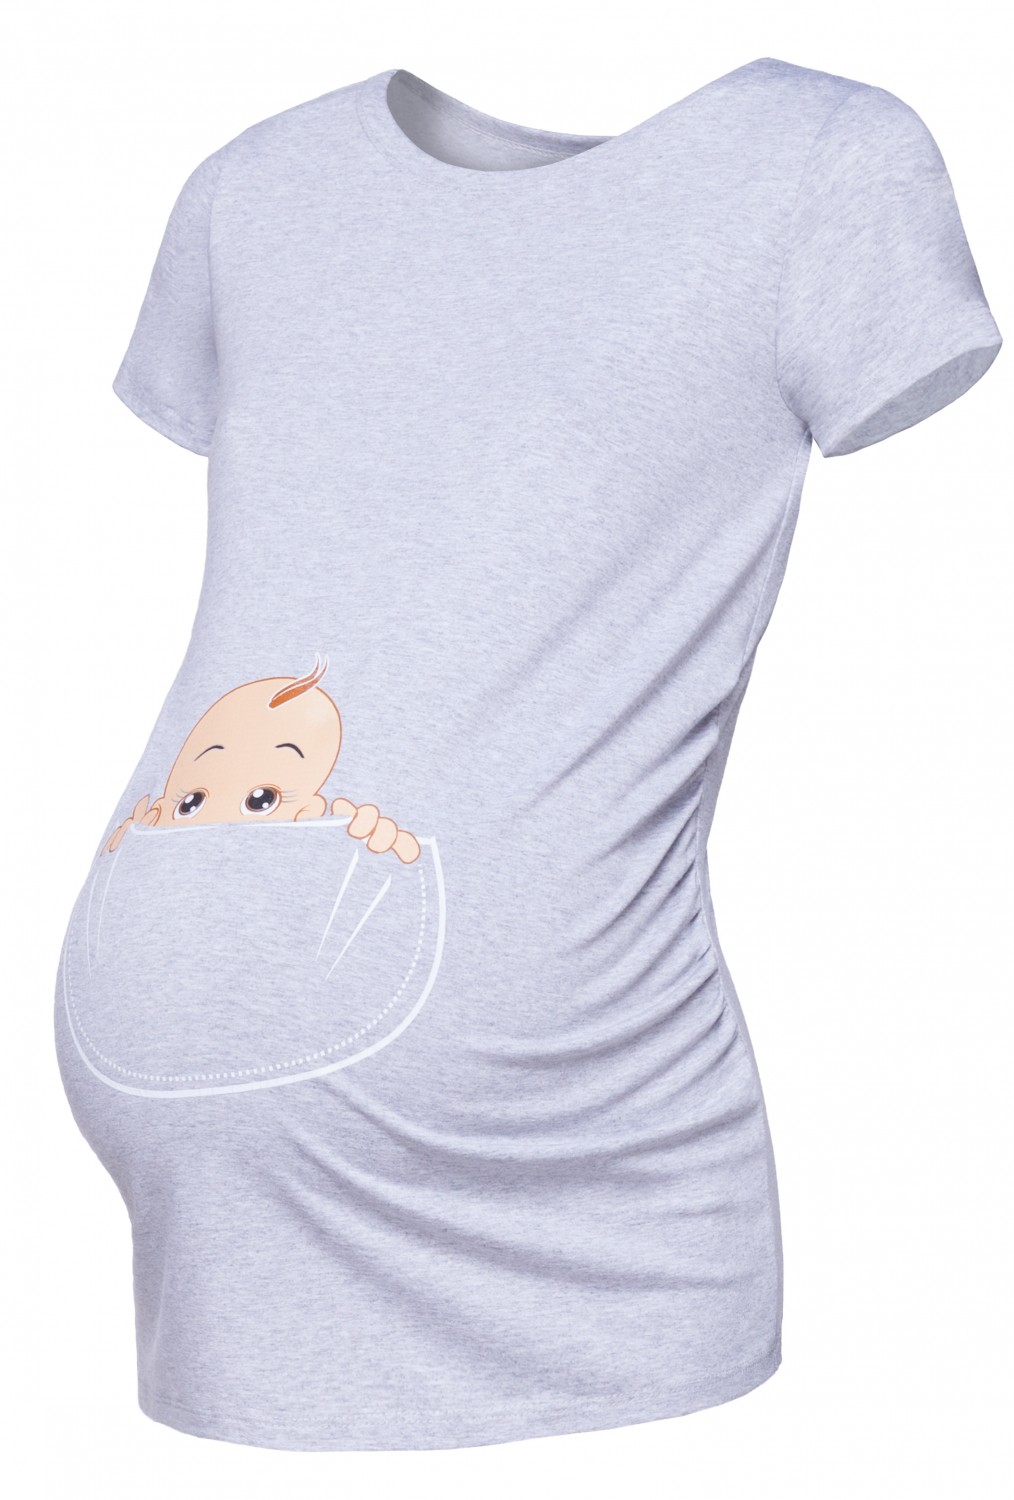 Happy Mama. Women's Maternity Baby in Pocket Print T-shirt Top Tee ...